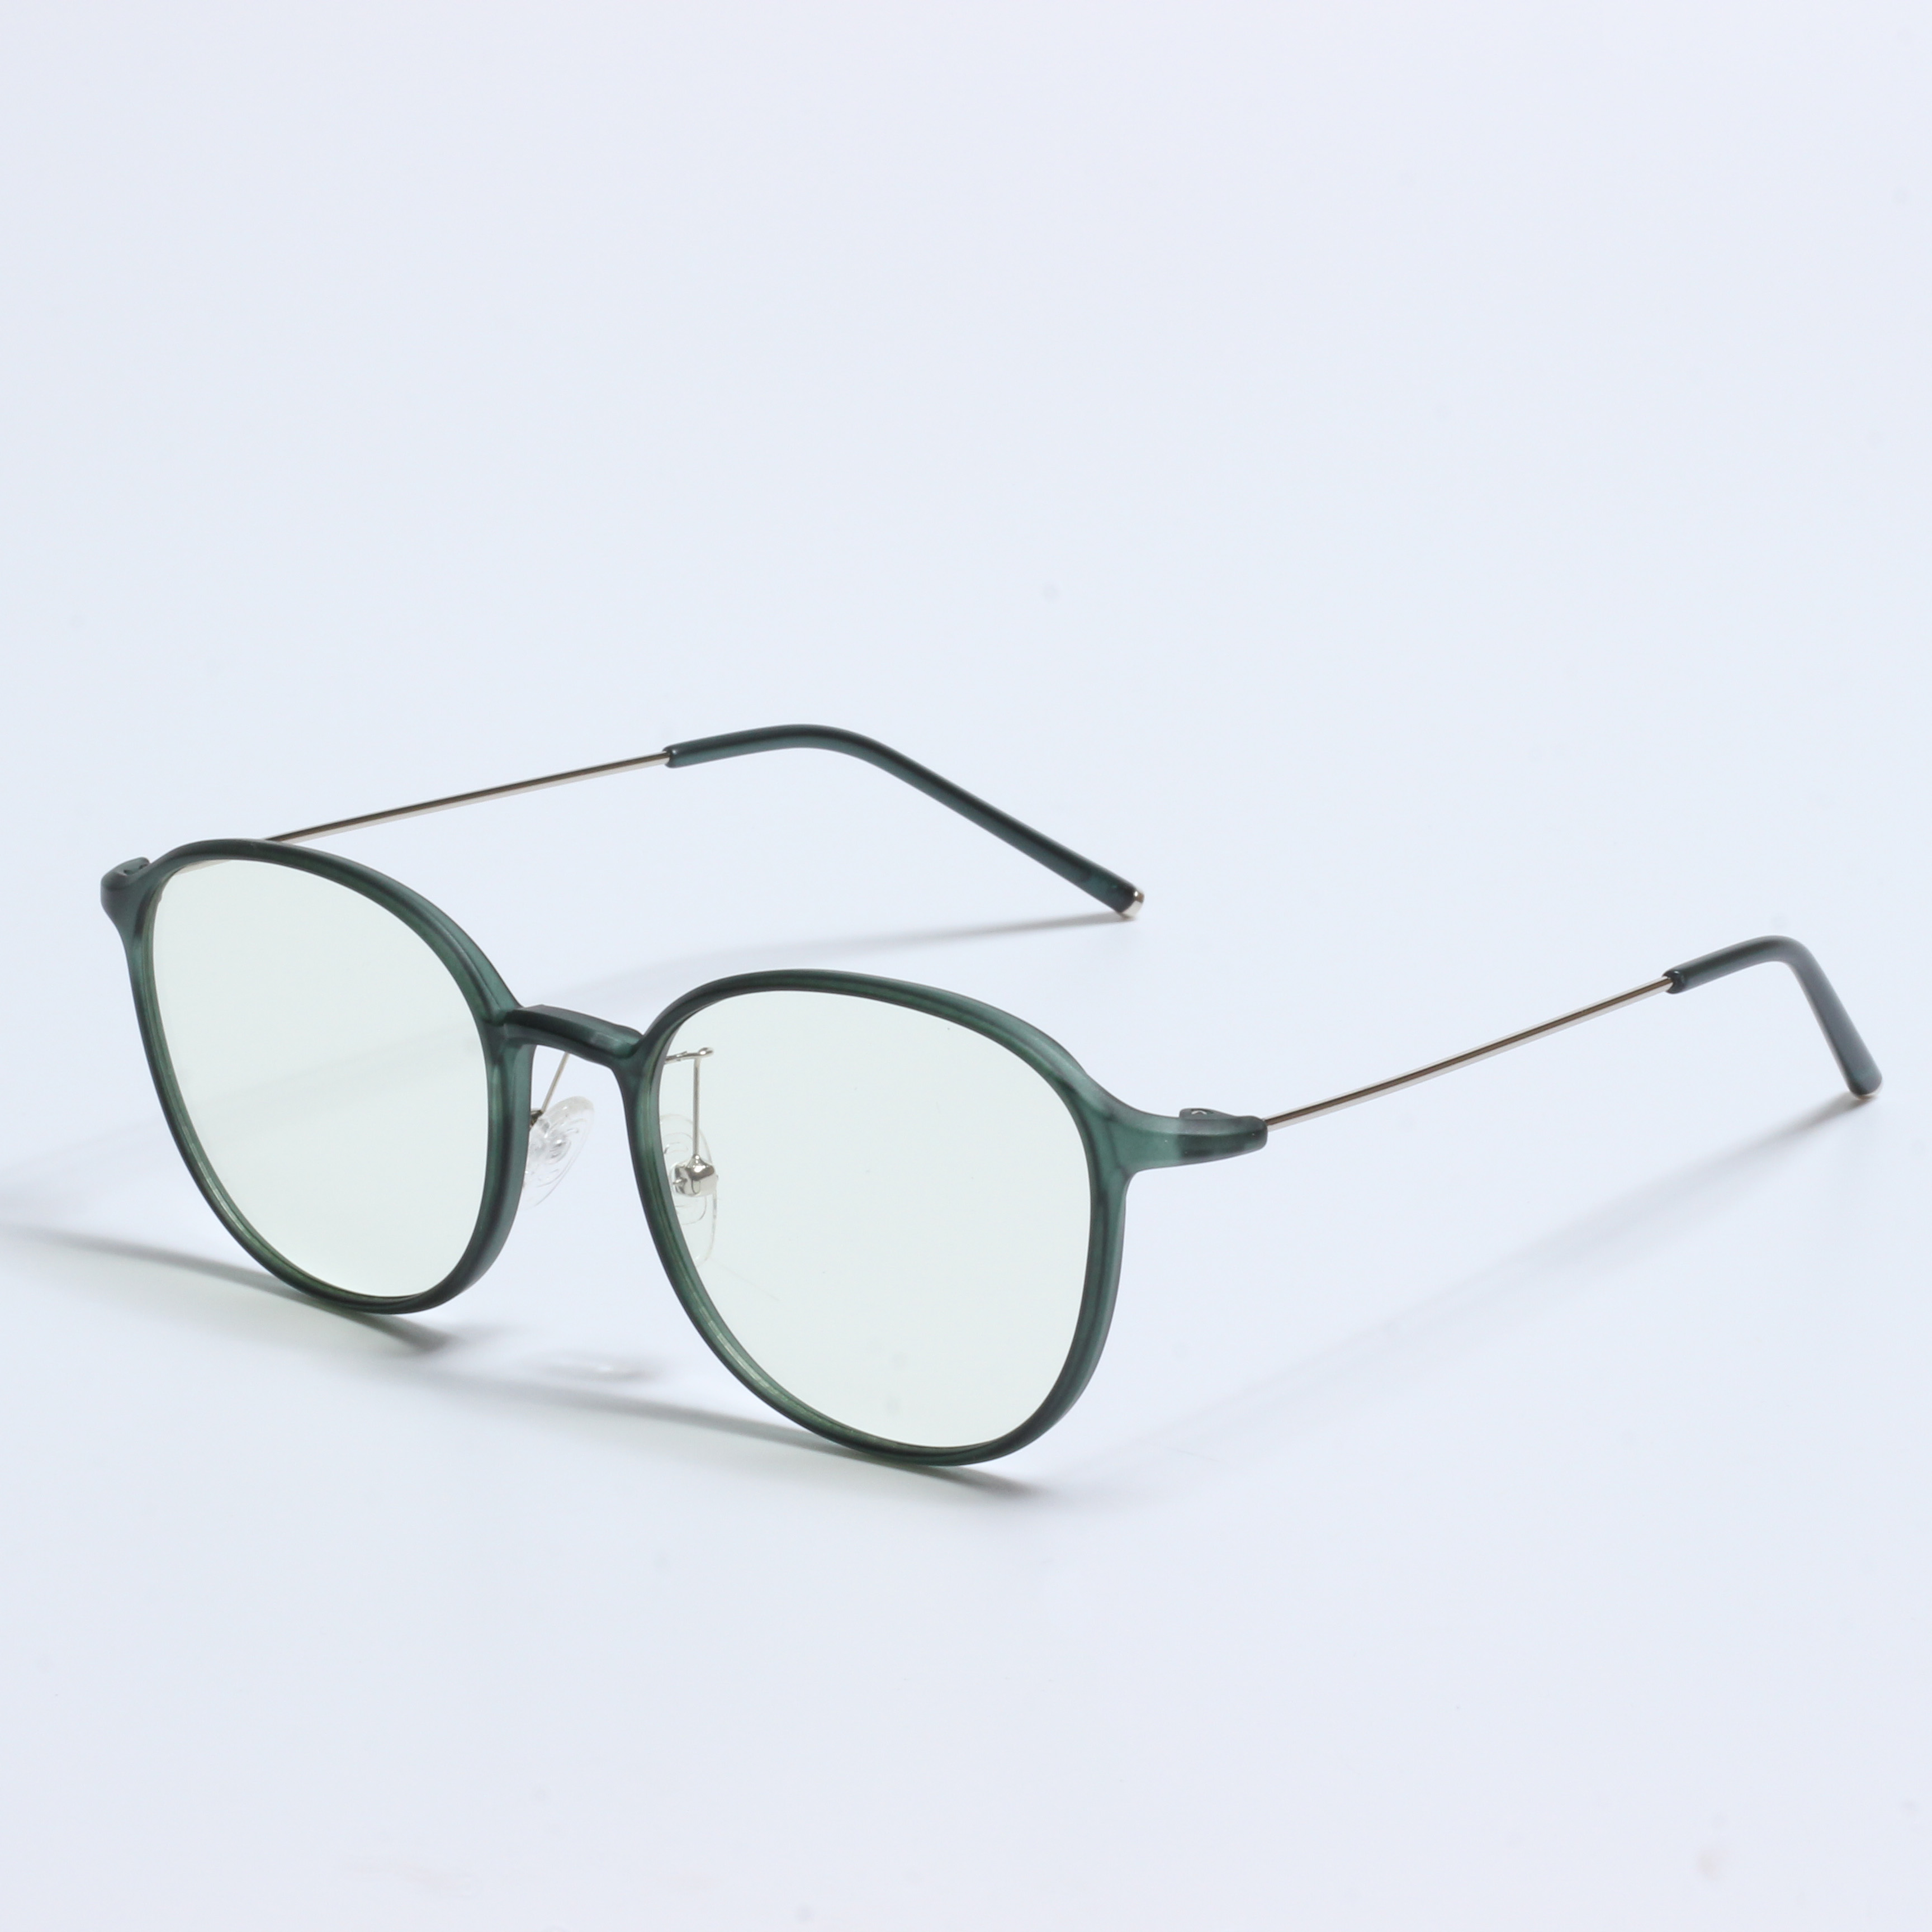 Tr90 Glasses Optical Wholesale (11)